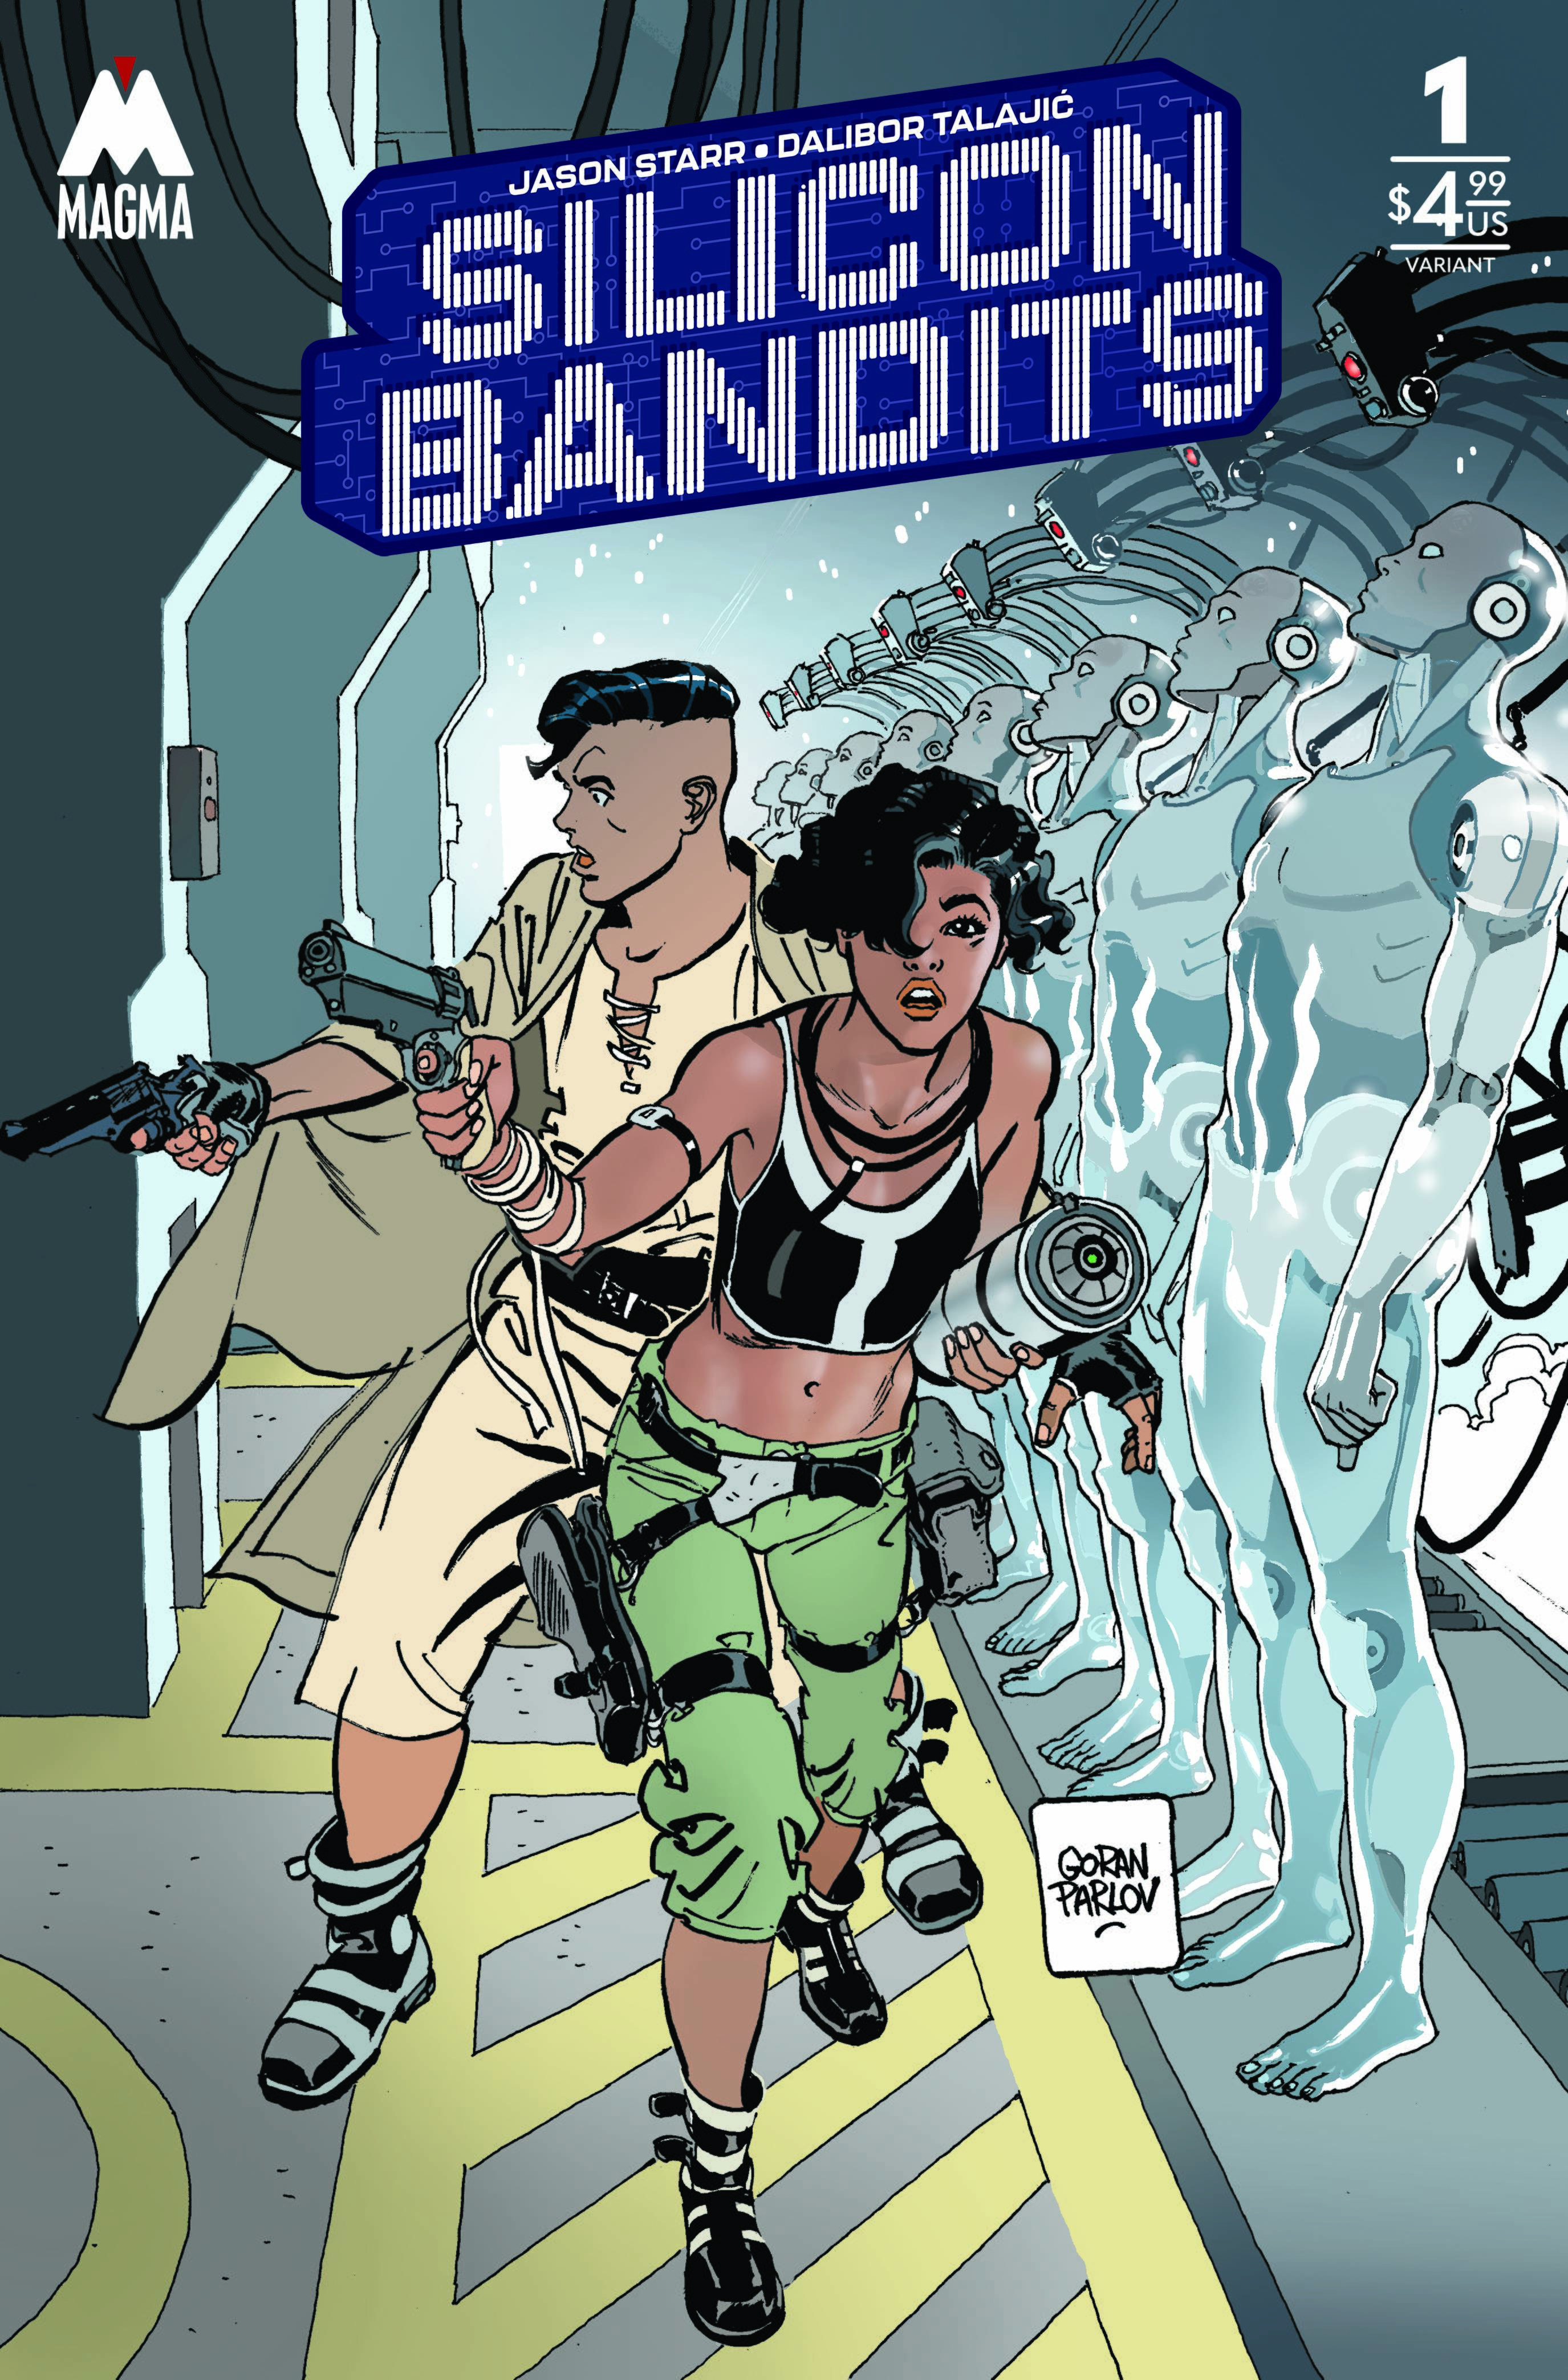 Silicon Bandits #1 Cover B Parlov